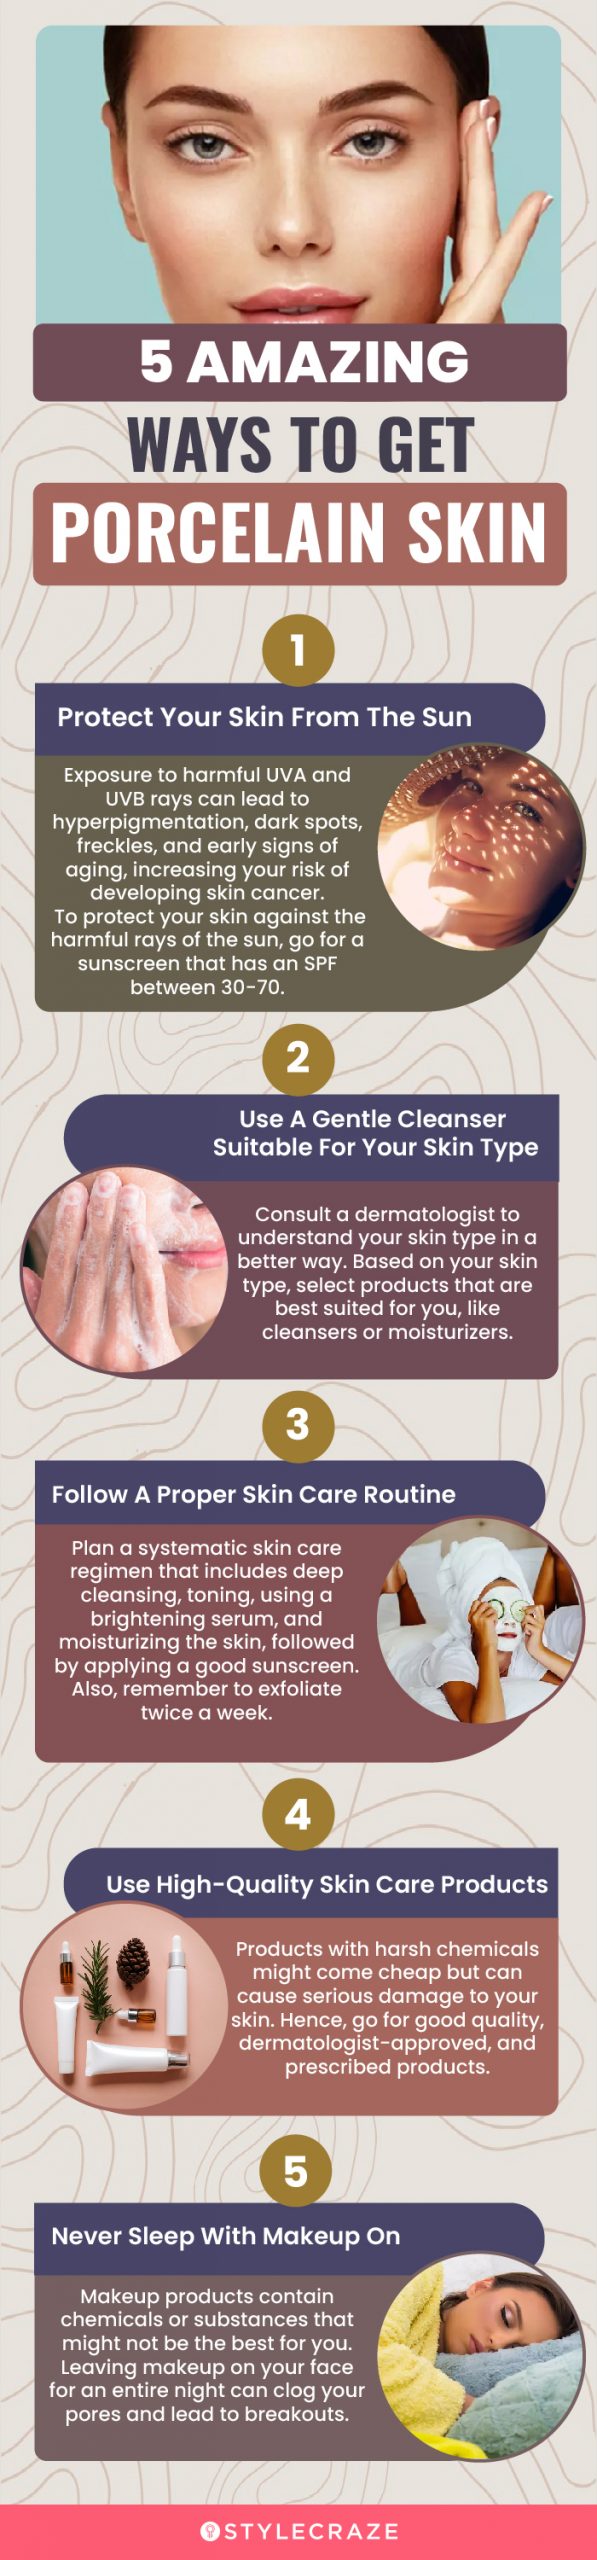 5 amazing ways to get porcelain skin (infographic)